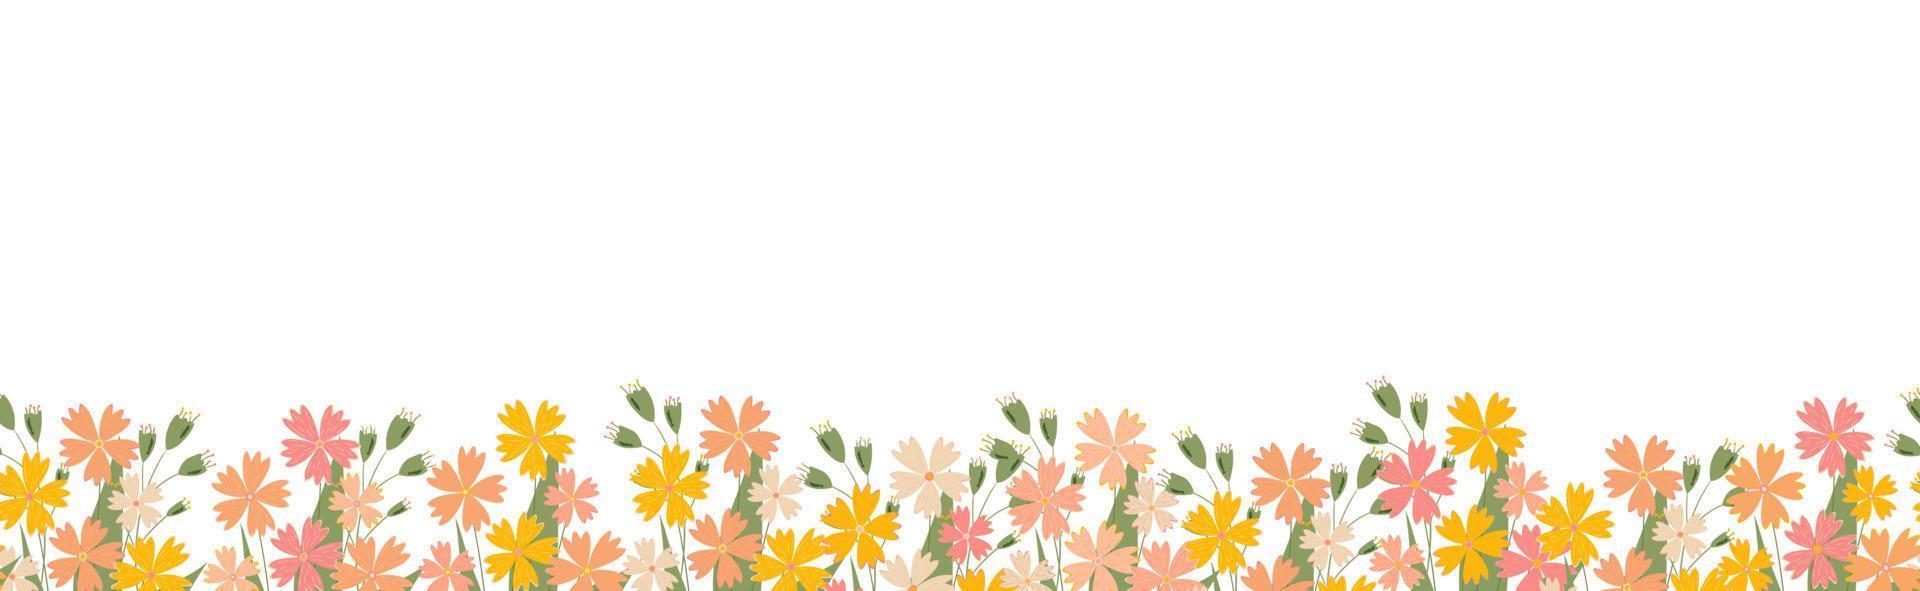 Flowers in vases banner vector